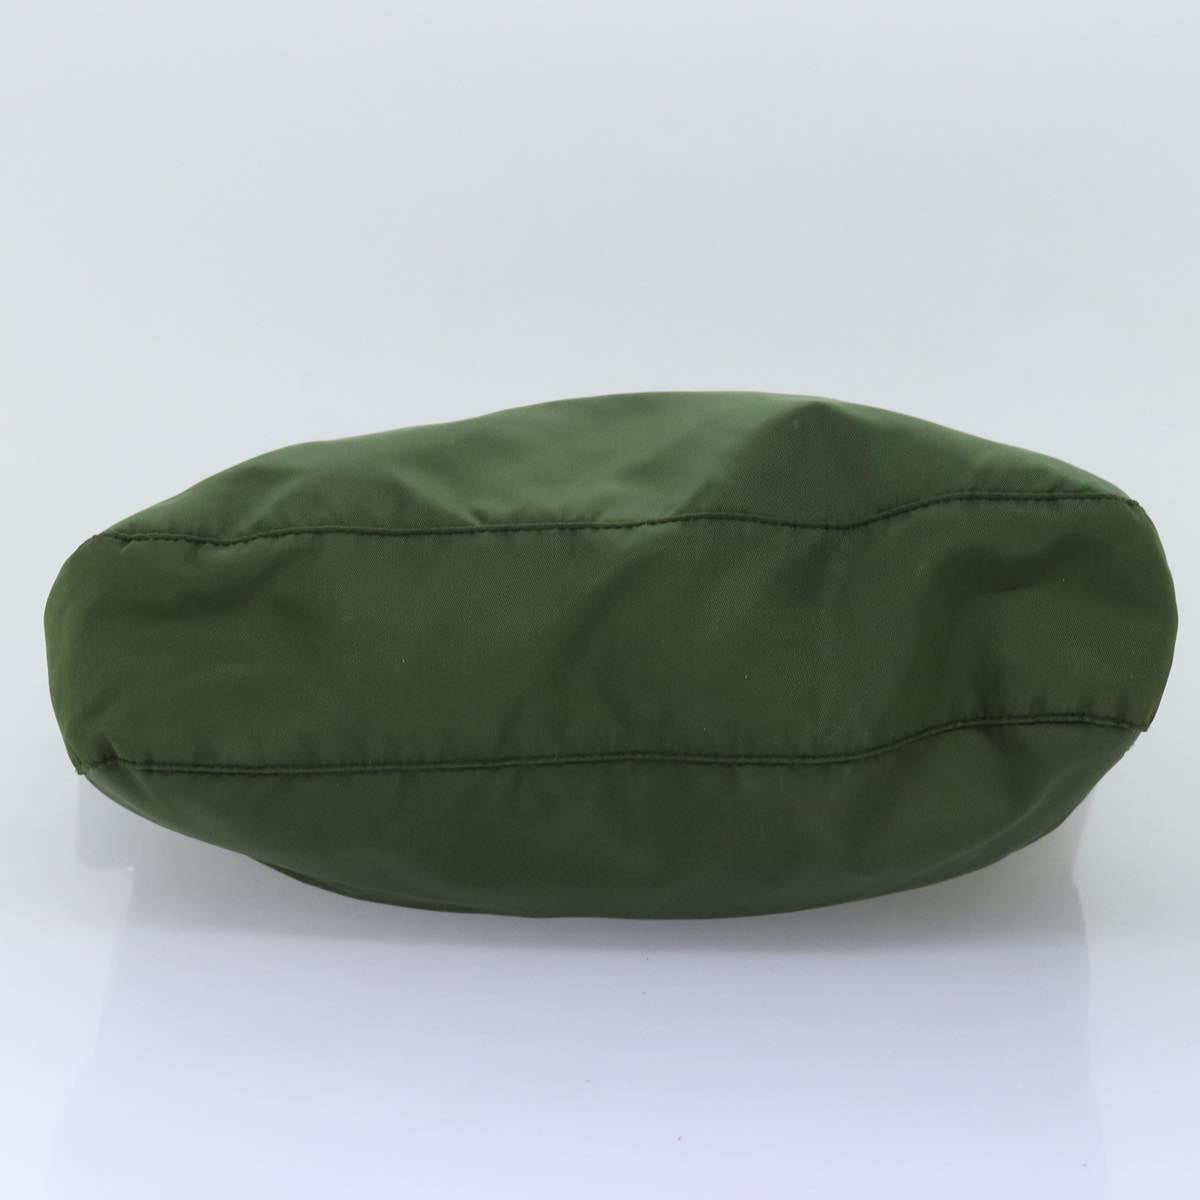 PRADA Shoulder Bag Nylon Khaki Auth 73603